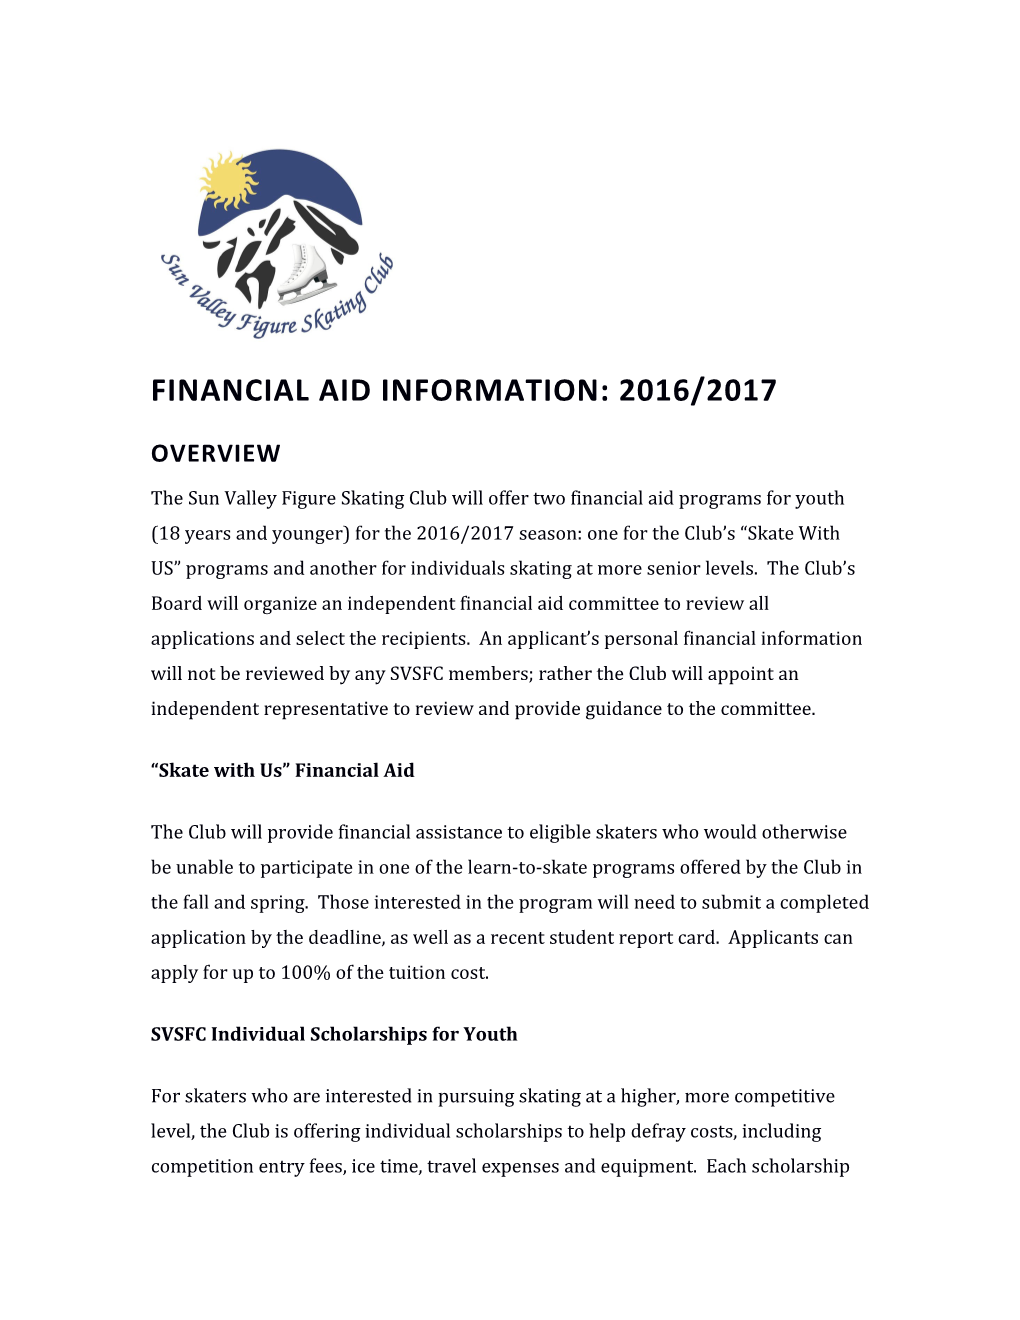 Financial Aid Information: 2016/2017